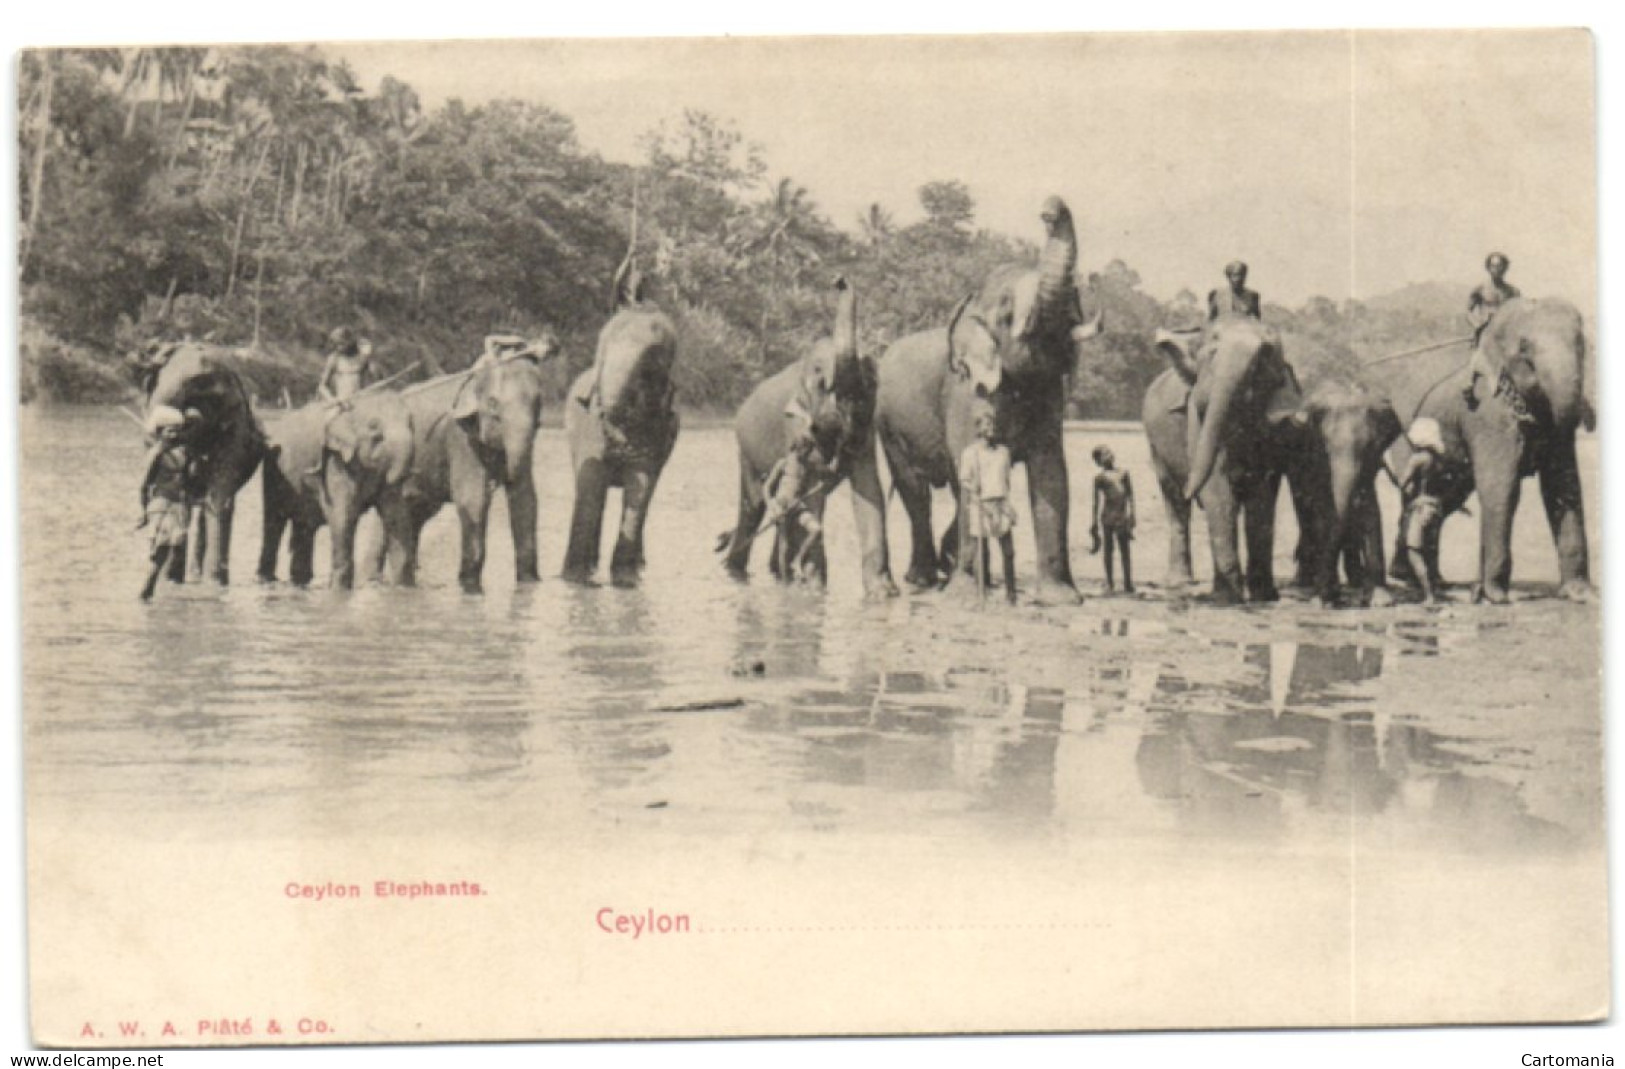 Ceylon Elephants - Sri Lanka (Ceylon)